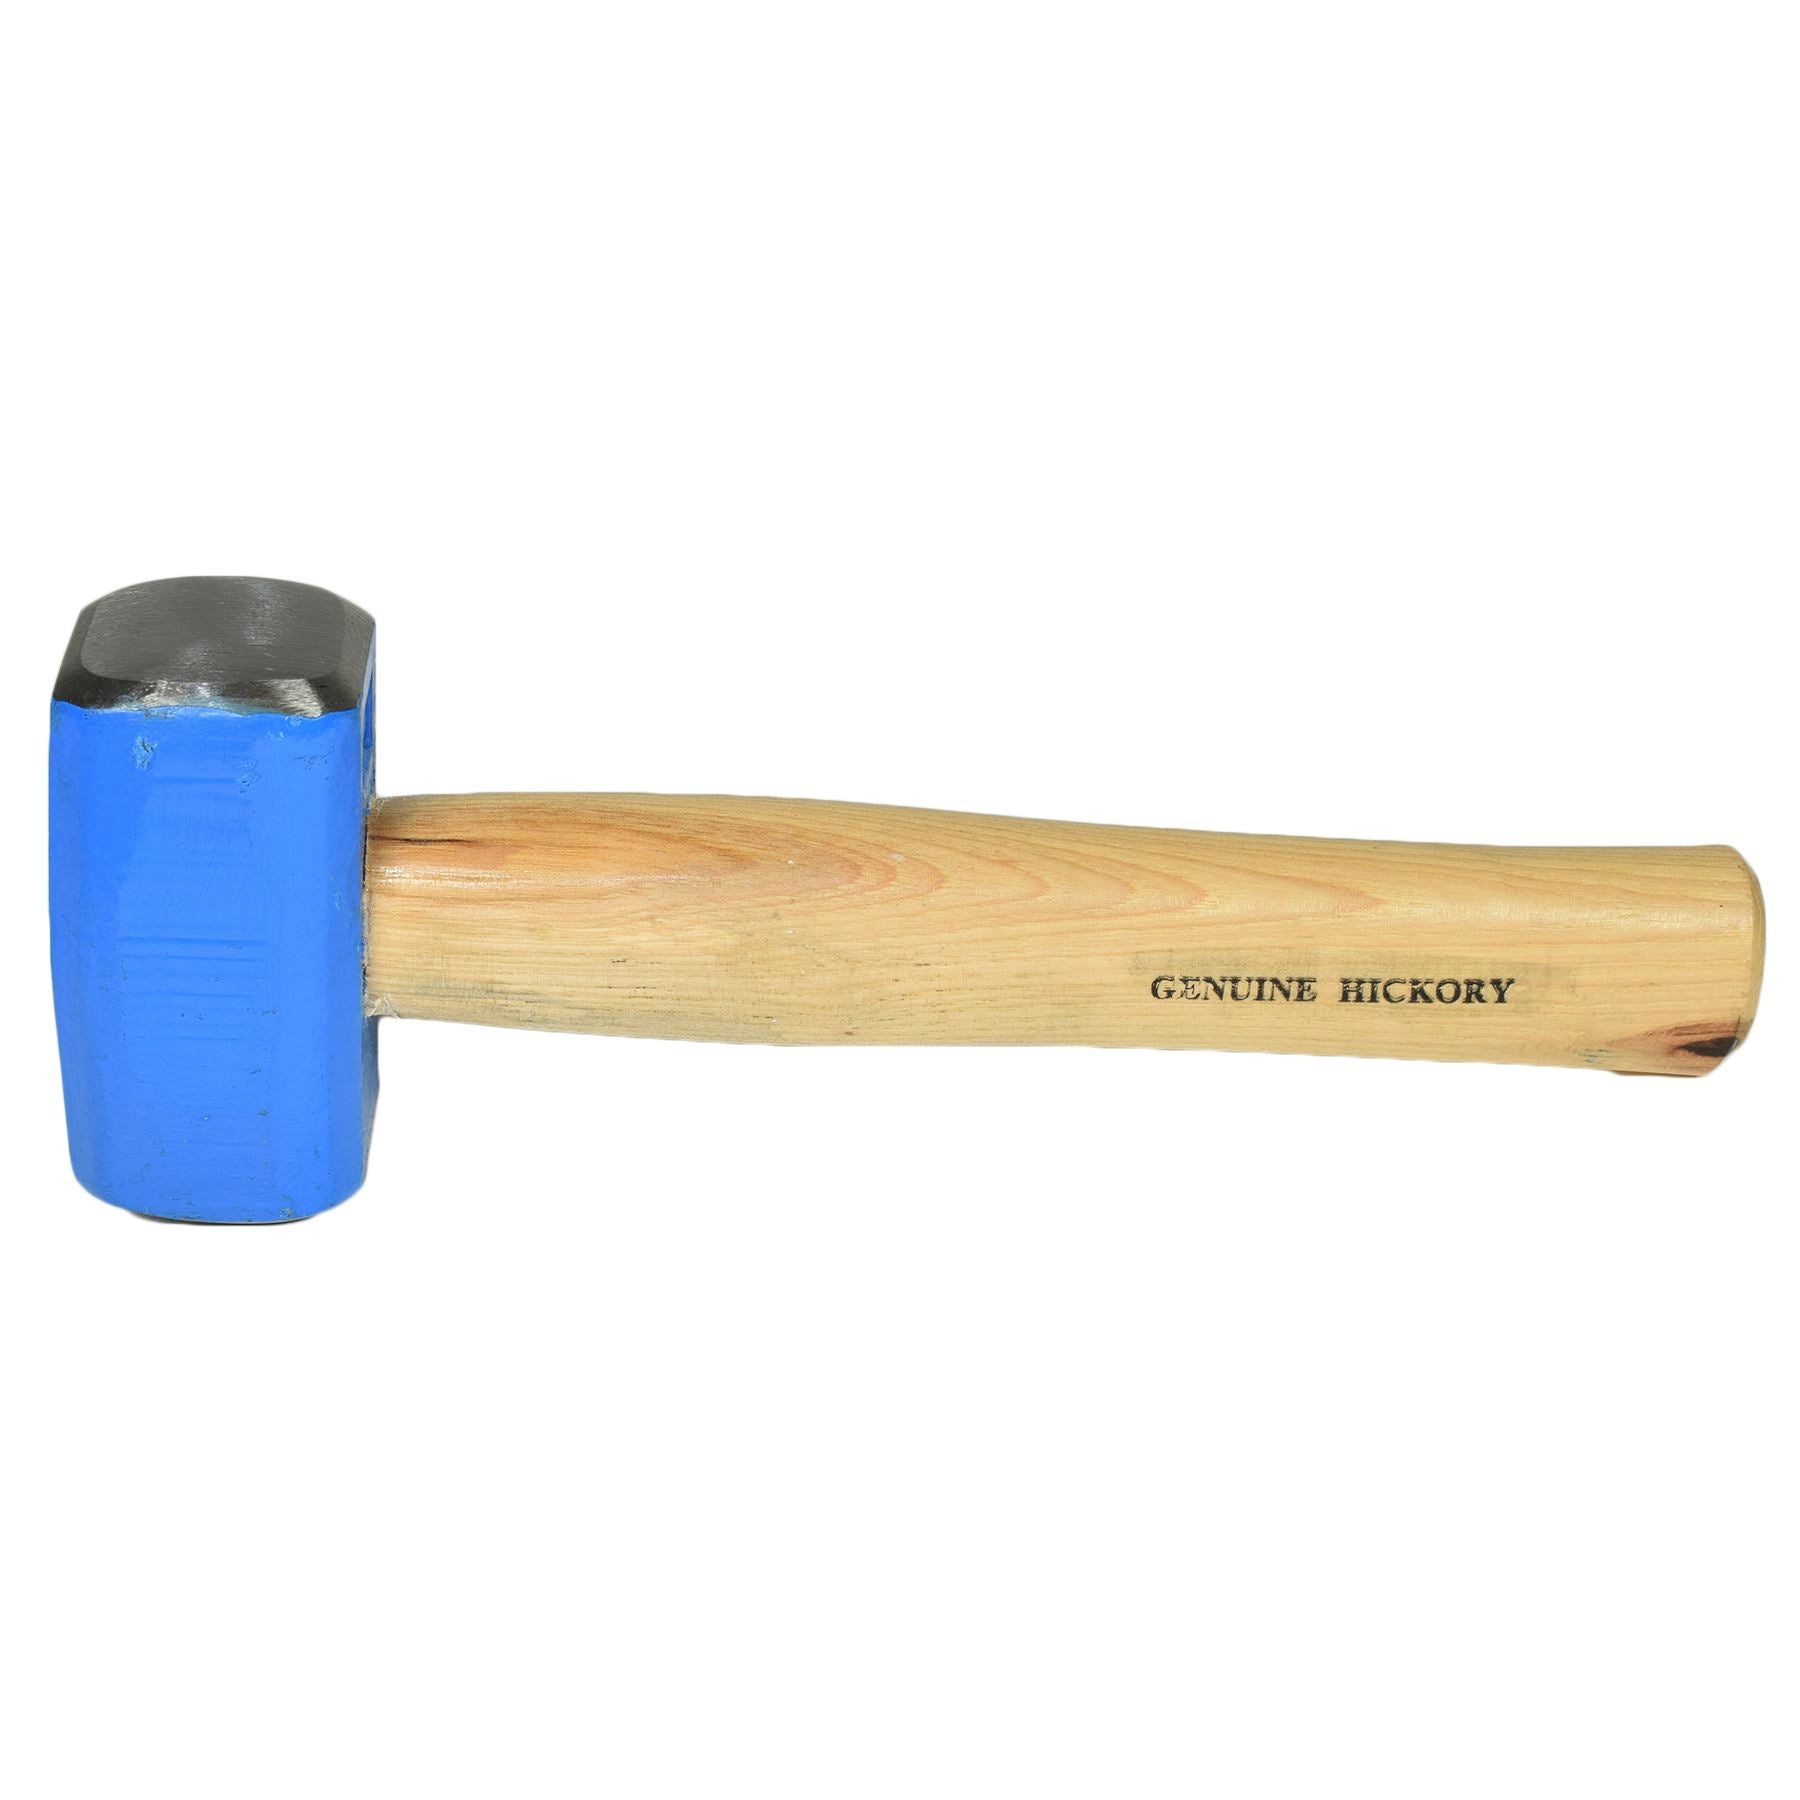 Double Face Sledge / Lump Hammer Genuine Hickory Handle Shaft 2.5lbs 1.13kgs